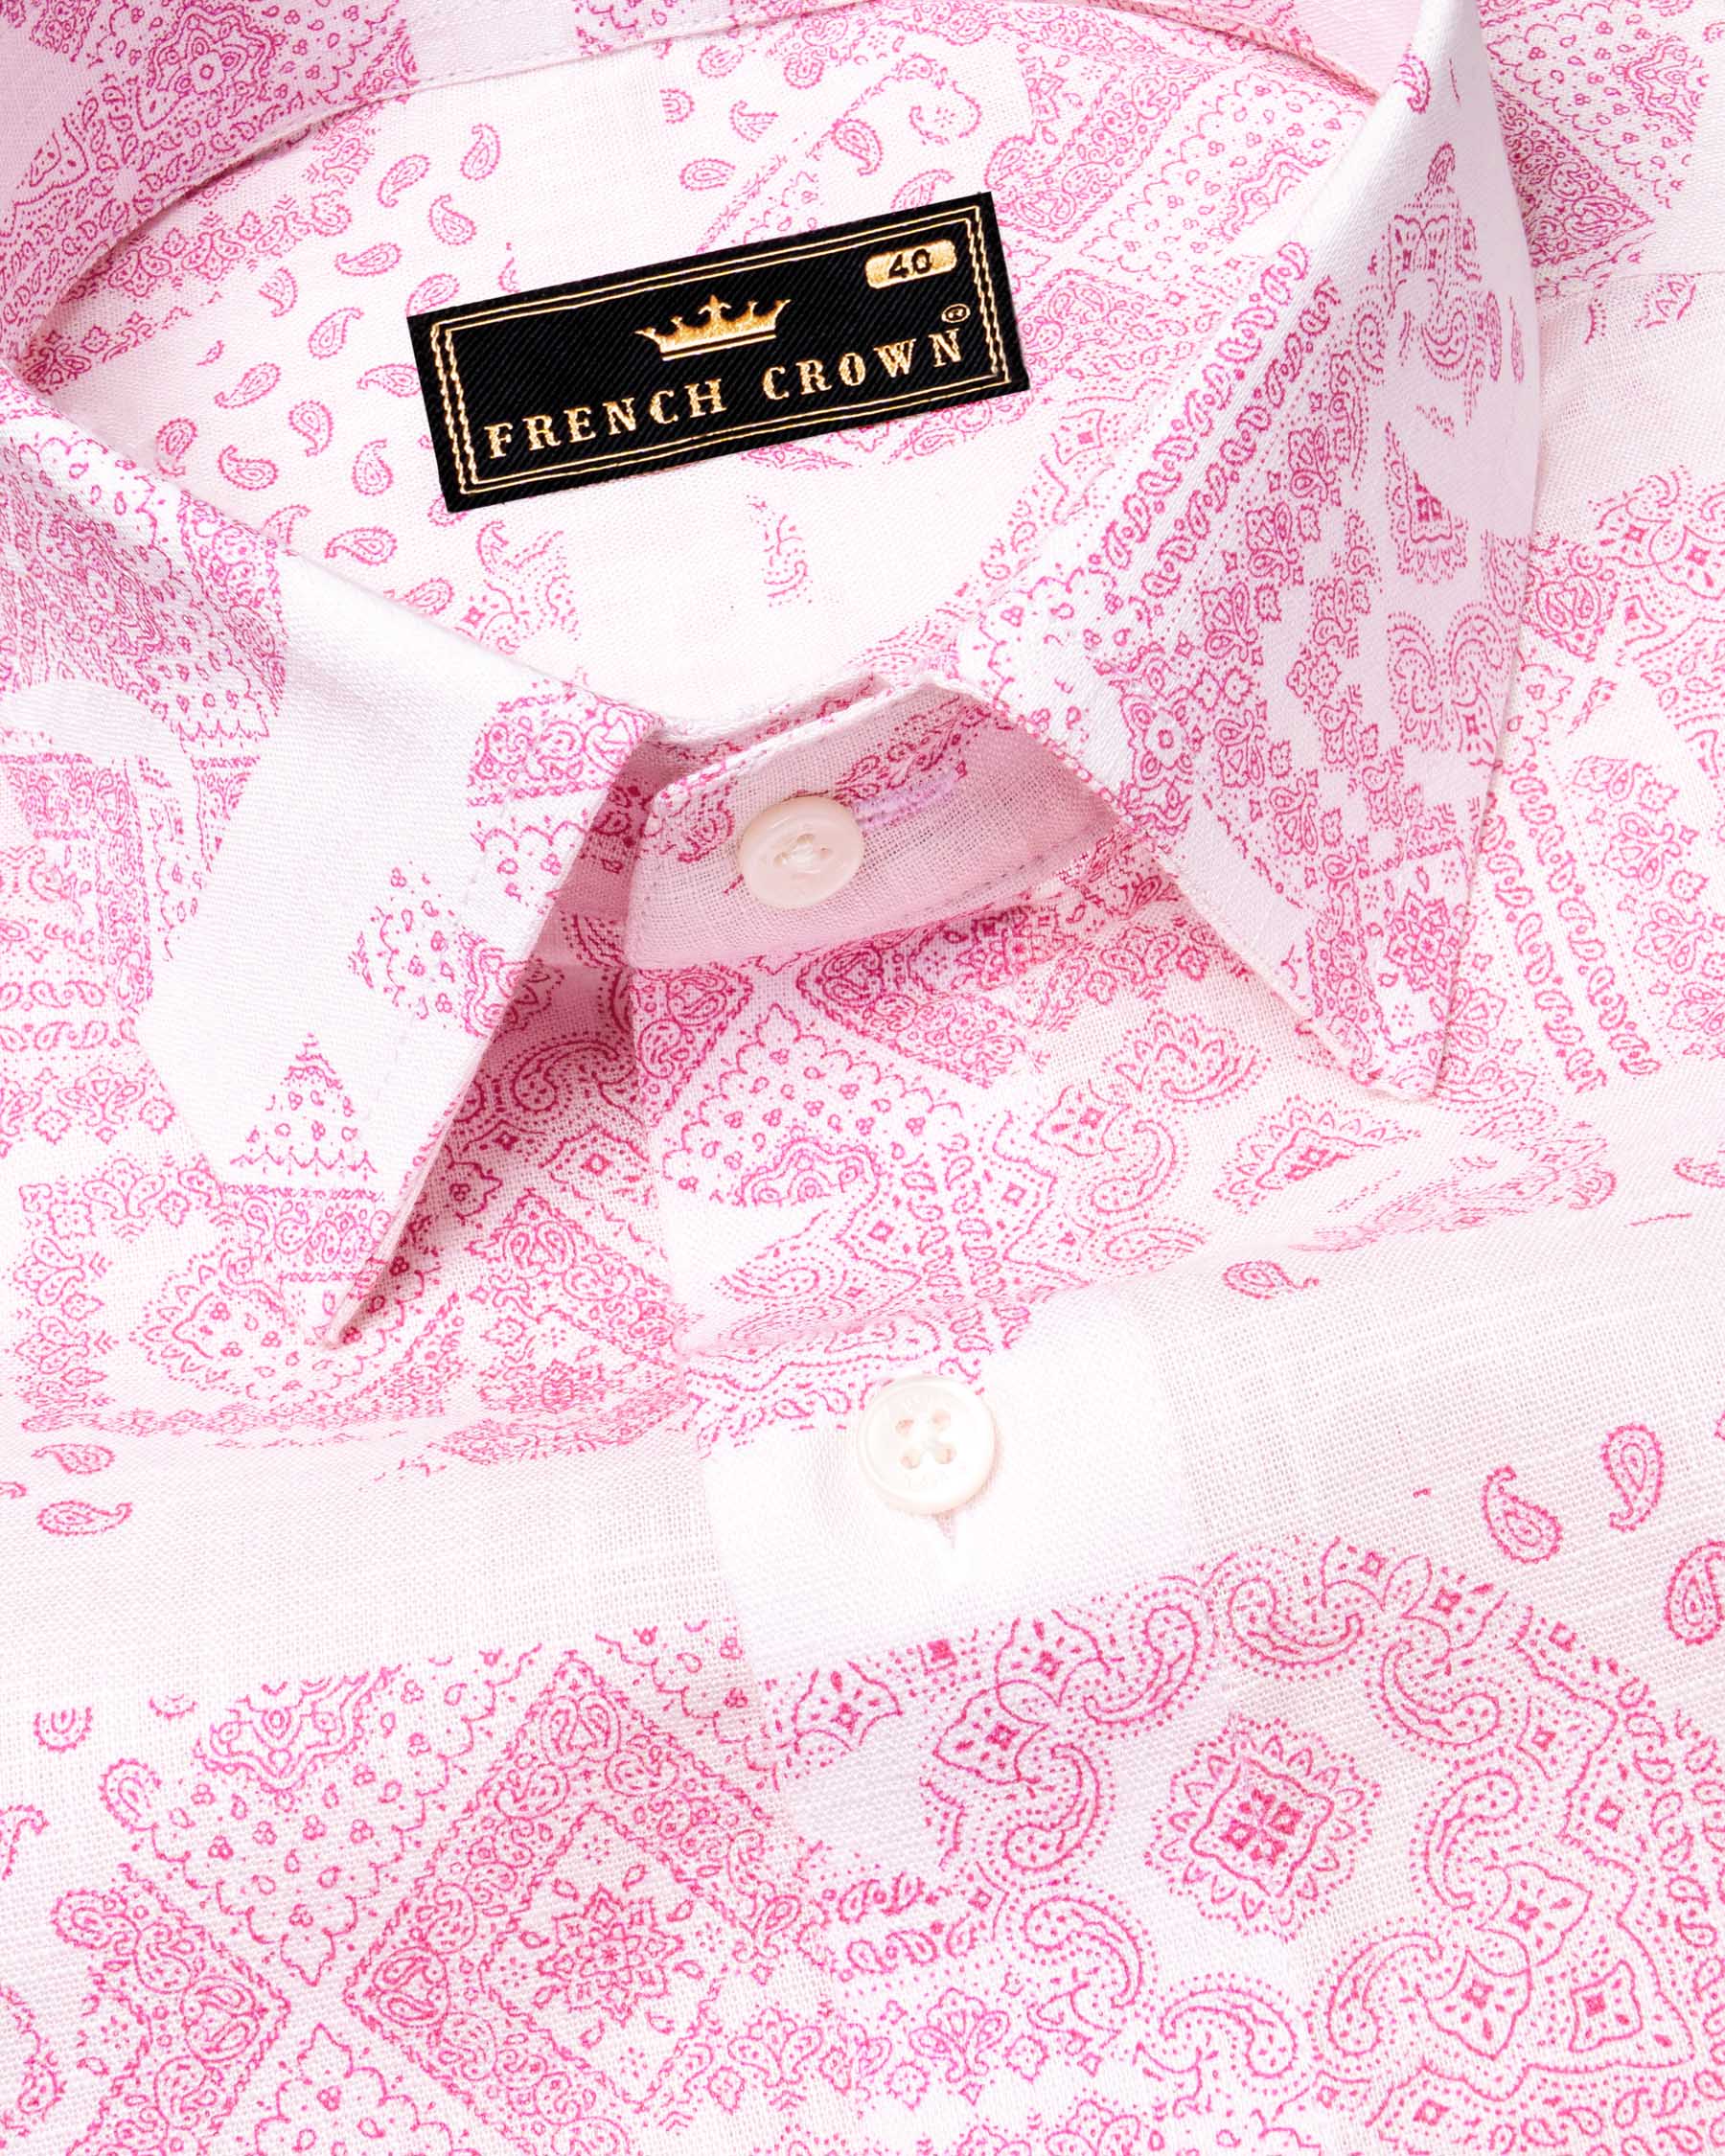 Amour Pink Ancient Paisleys Printed Luxurious Linen Shirt 6380-38, 6380-H-38, 6380-39, 6380-H-39, 6380-40, 6380-H-40, 6380-42, 6380-H-42, 6380-44, 6380-H-44, 6380-46, 6380-H-46, 6380-48, 6380-H-48, 6380-50, 6380-H-50, 6380-52, 6380-H-52